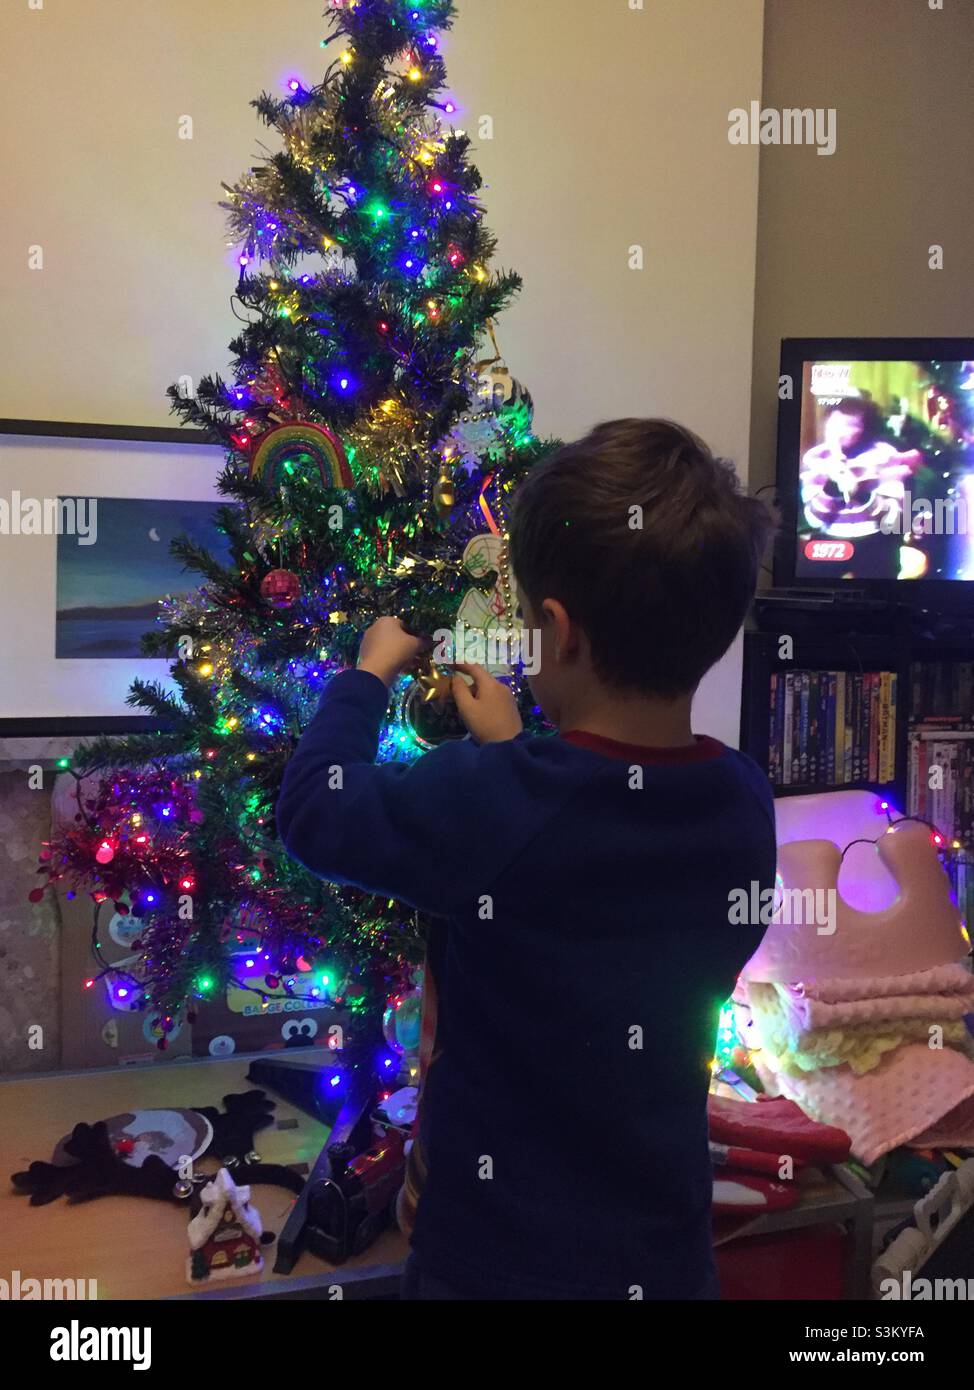 Boy decorating a Christmas tree Stock Photo